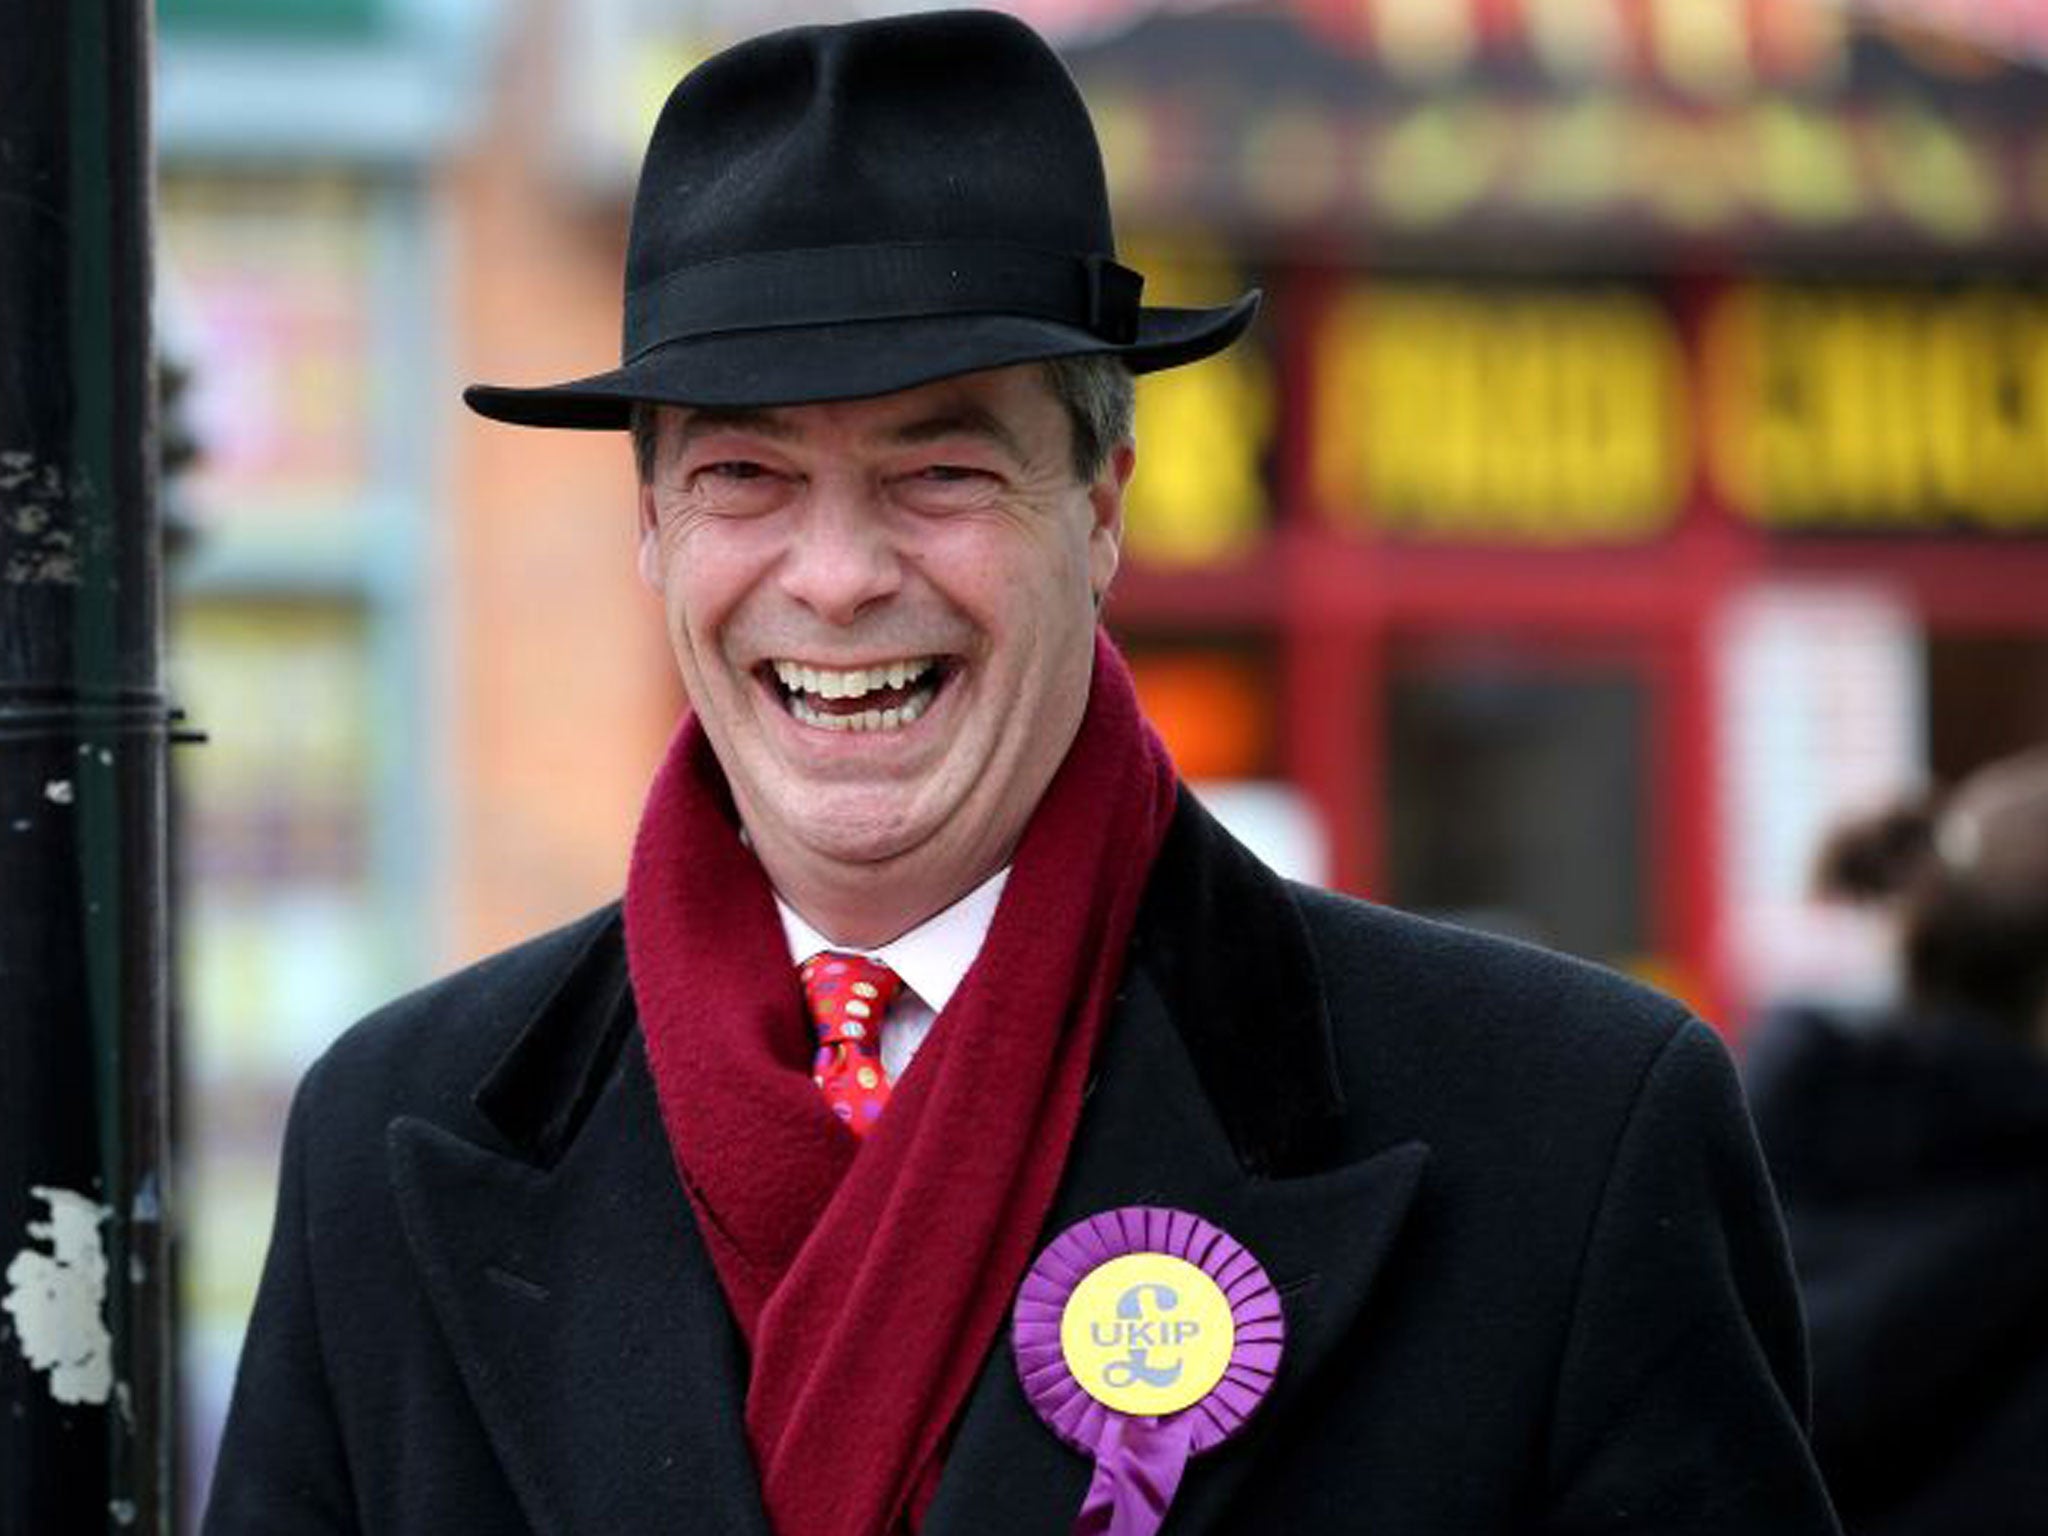 Party leader Nigel Farage